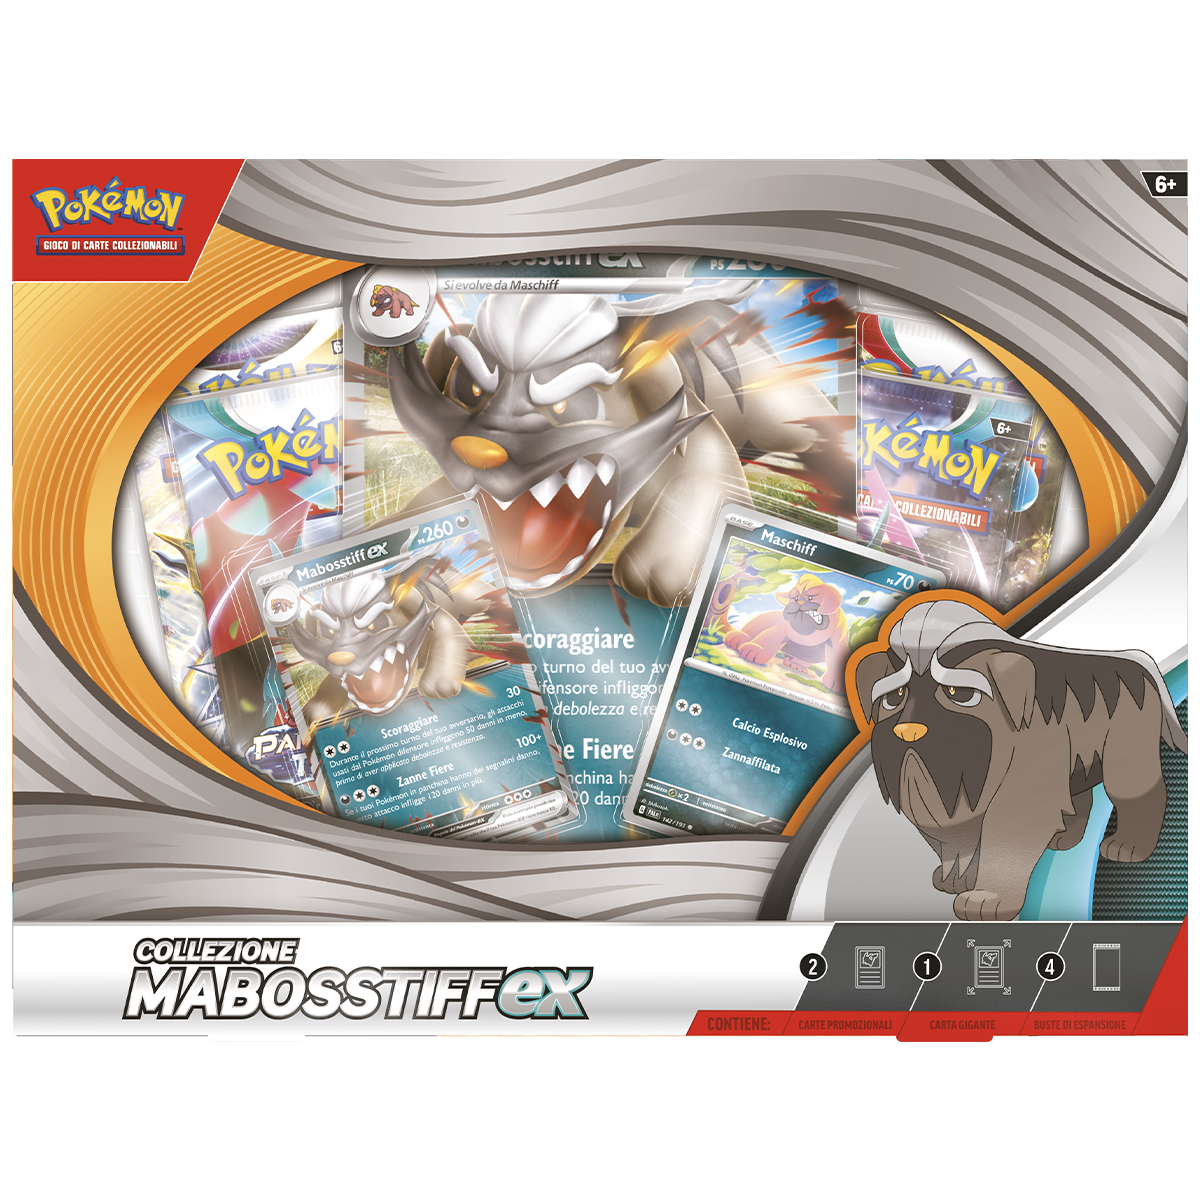 Pokémon collezione mabosstiff-ex - POKEMON